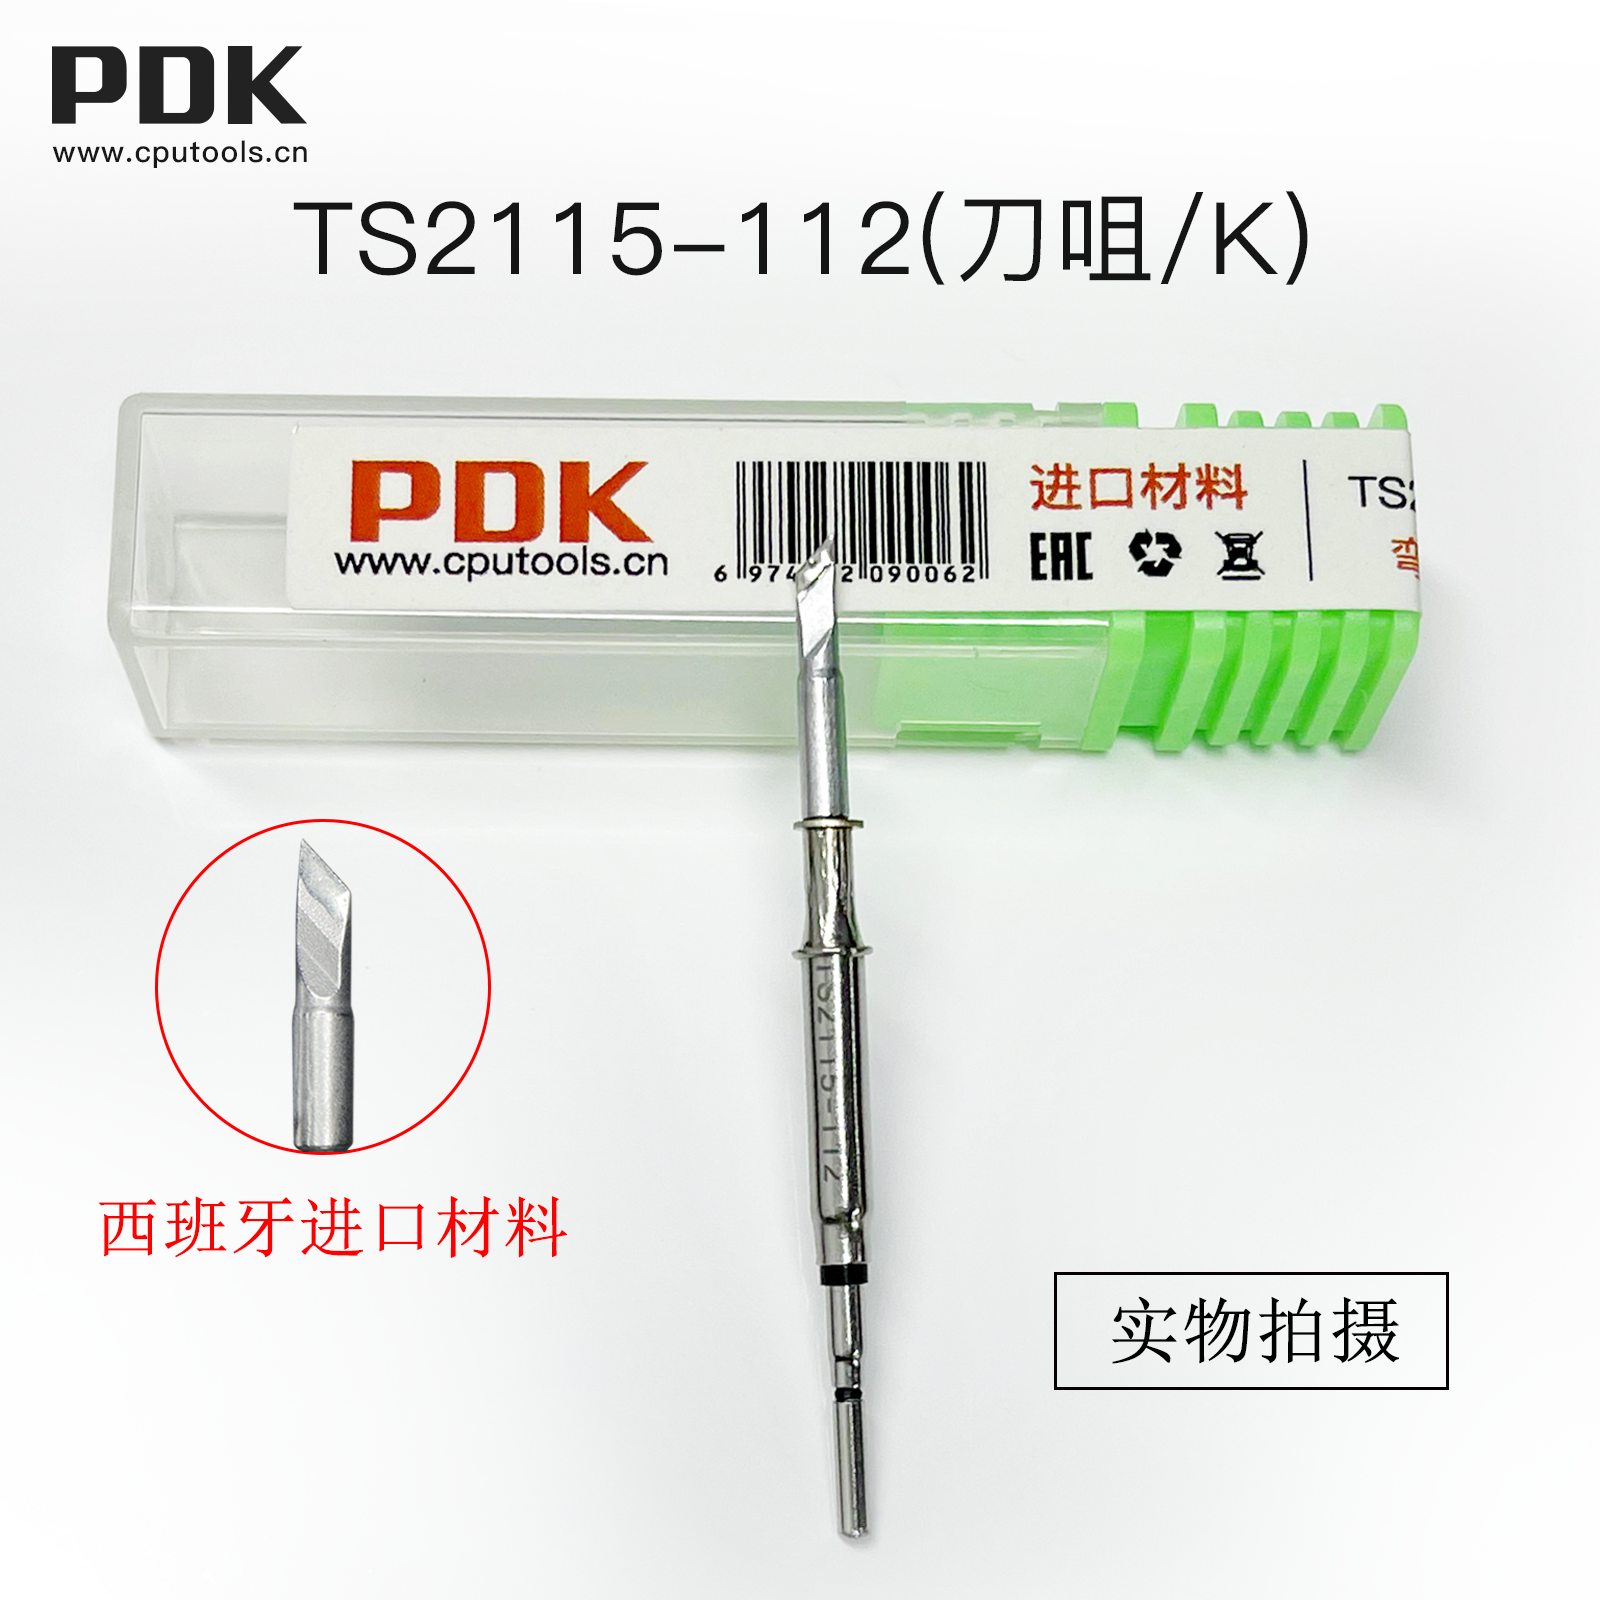 PDK TS2-C115 hand shank(图1)